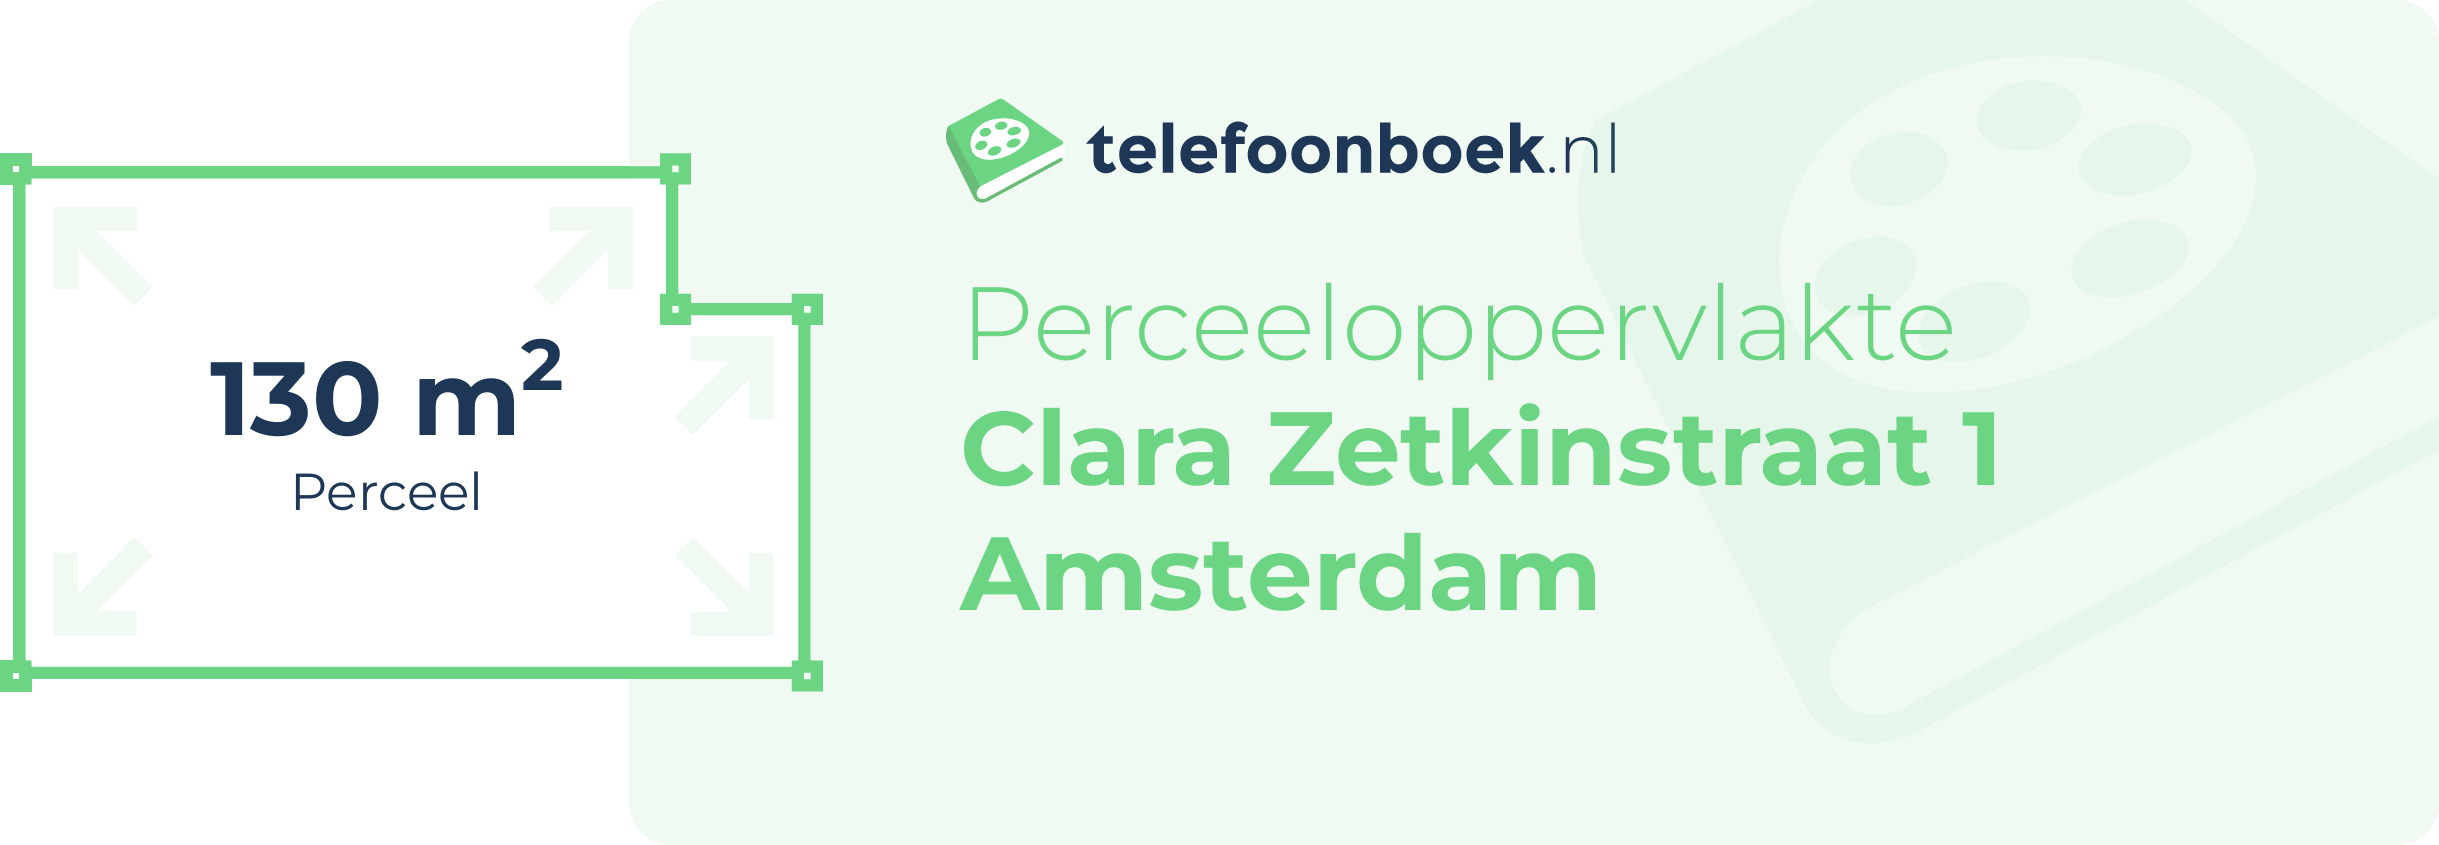 Perceeloppervlakte Clara Zetkinstraat 1 Amsterdam